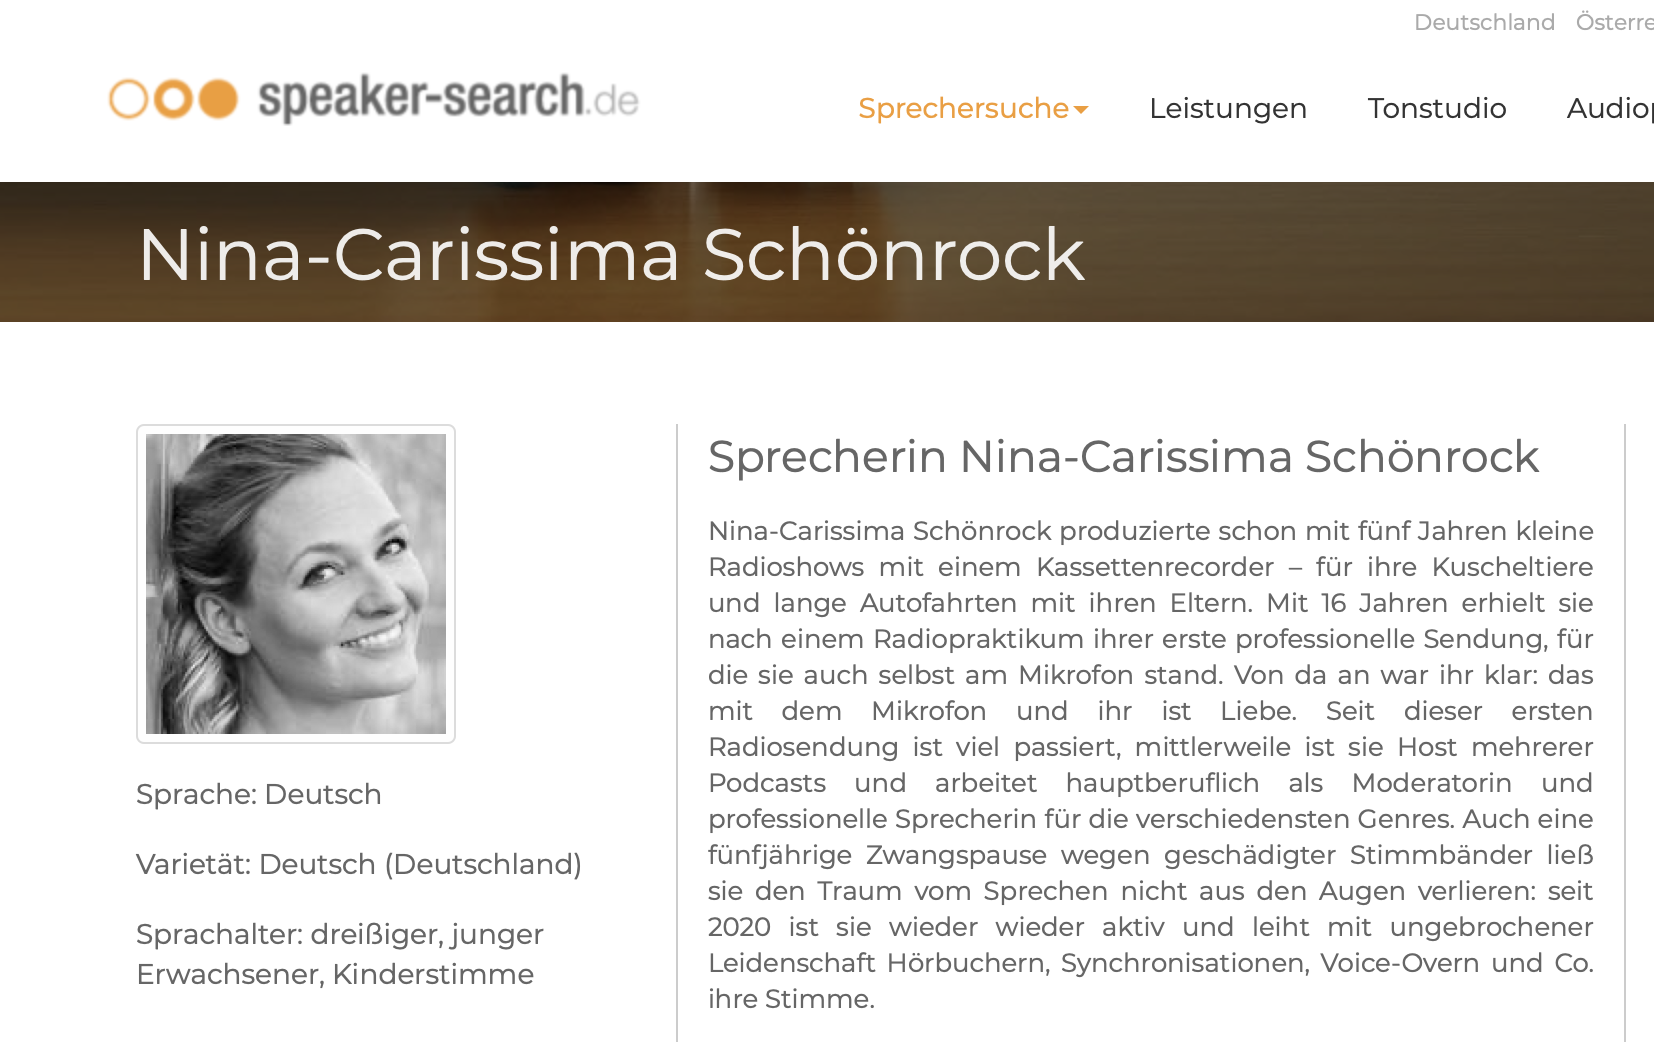 Nina-Carissima Schönrock, Sprecherin Nina-Carissima Schönrock, Sprecheragentur, speaker-search